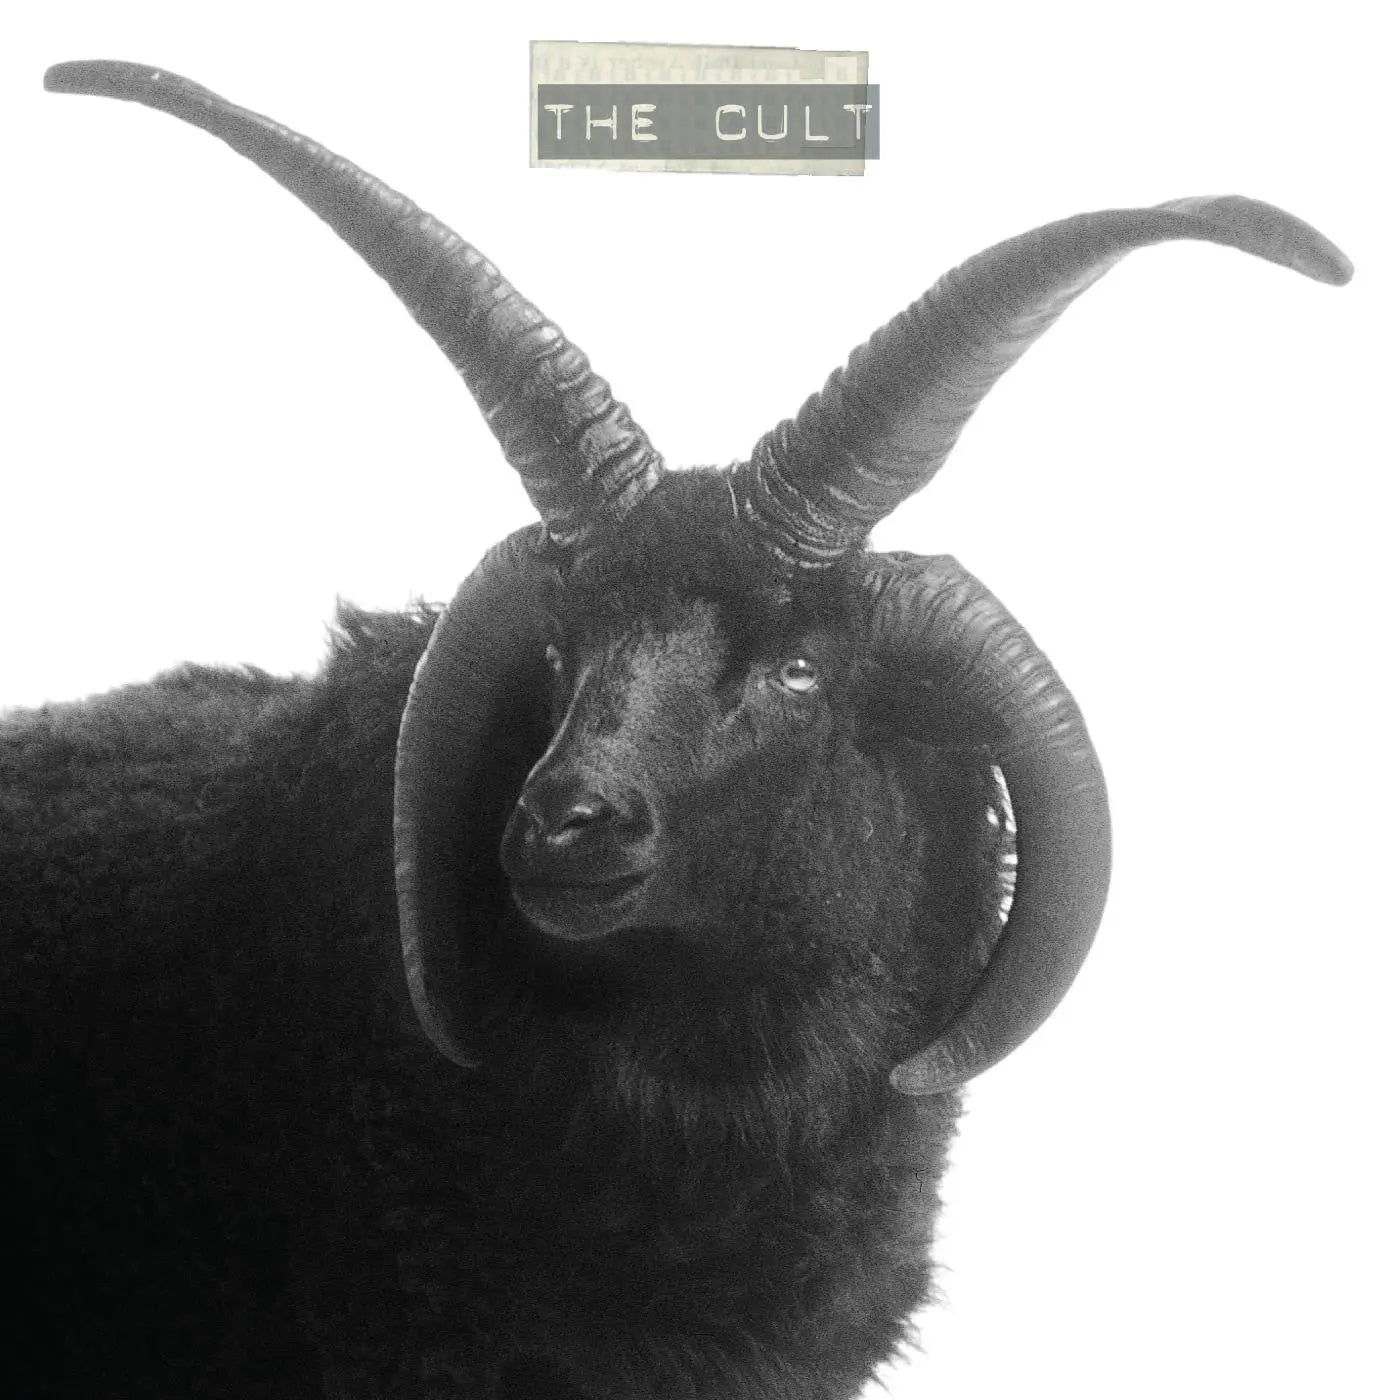 The Cult - The Cult (Black Sheep) [2LP White Vinyl]